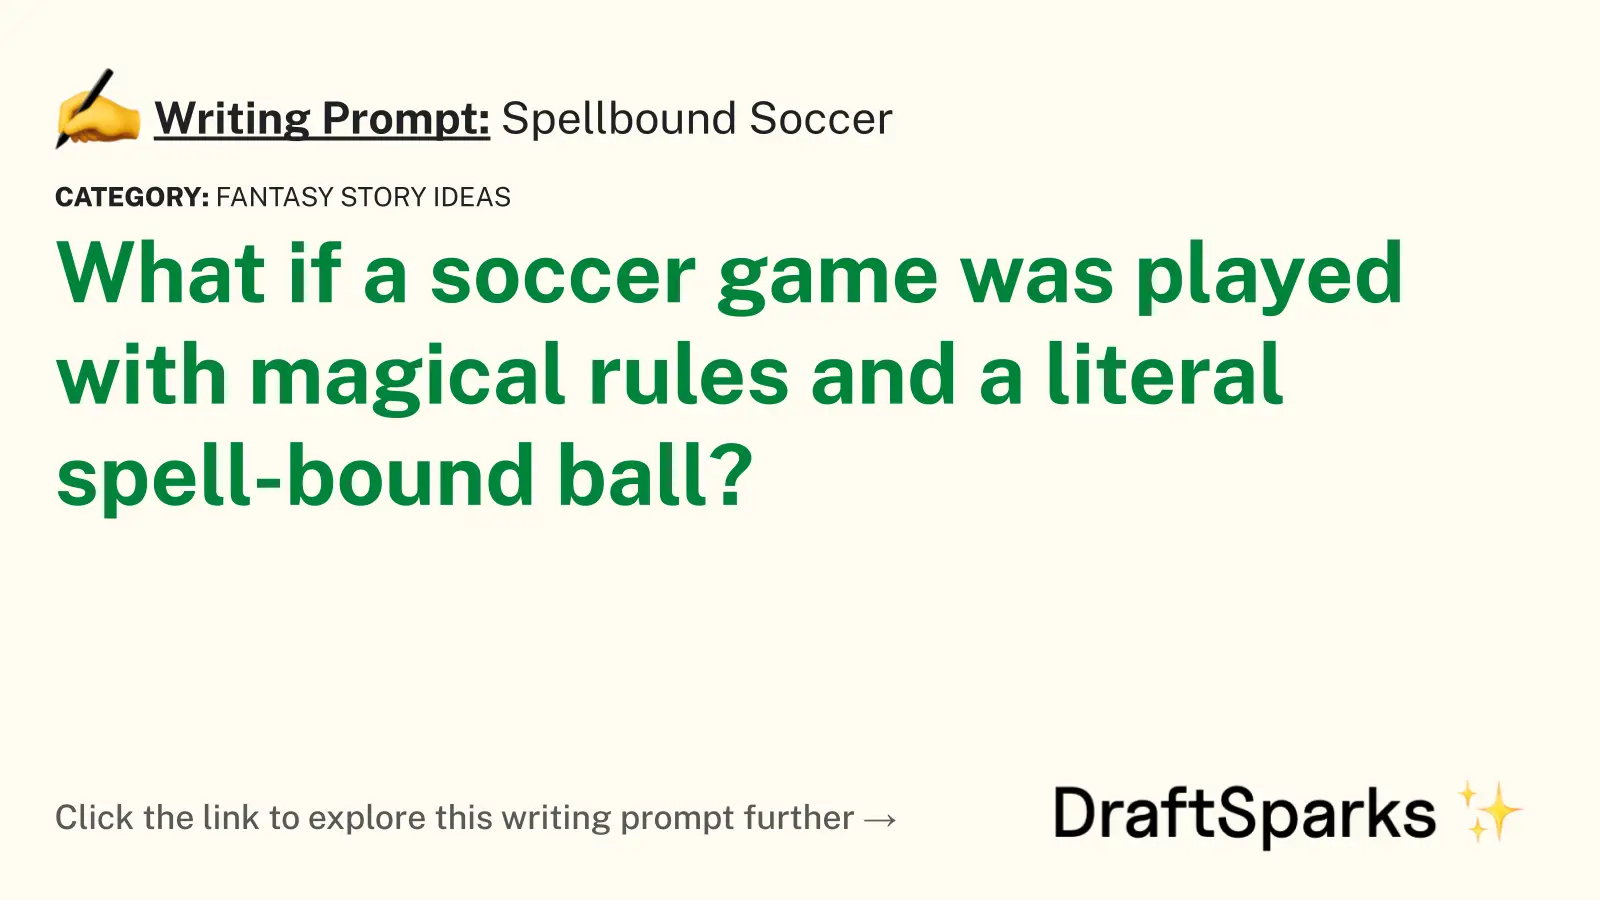 Spellbound Soccer